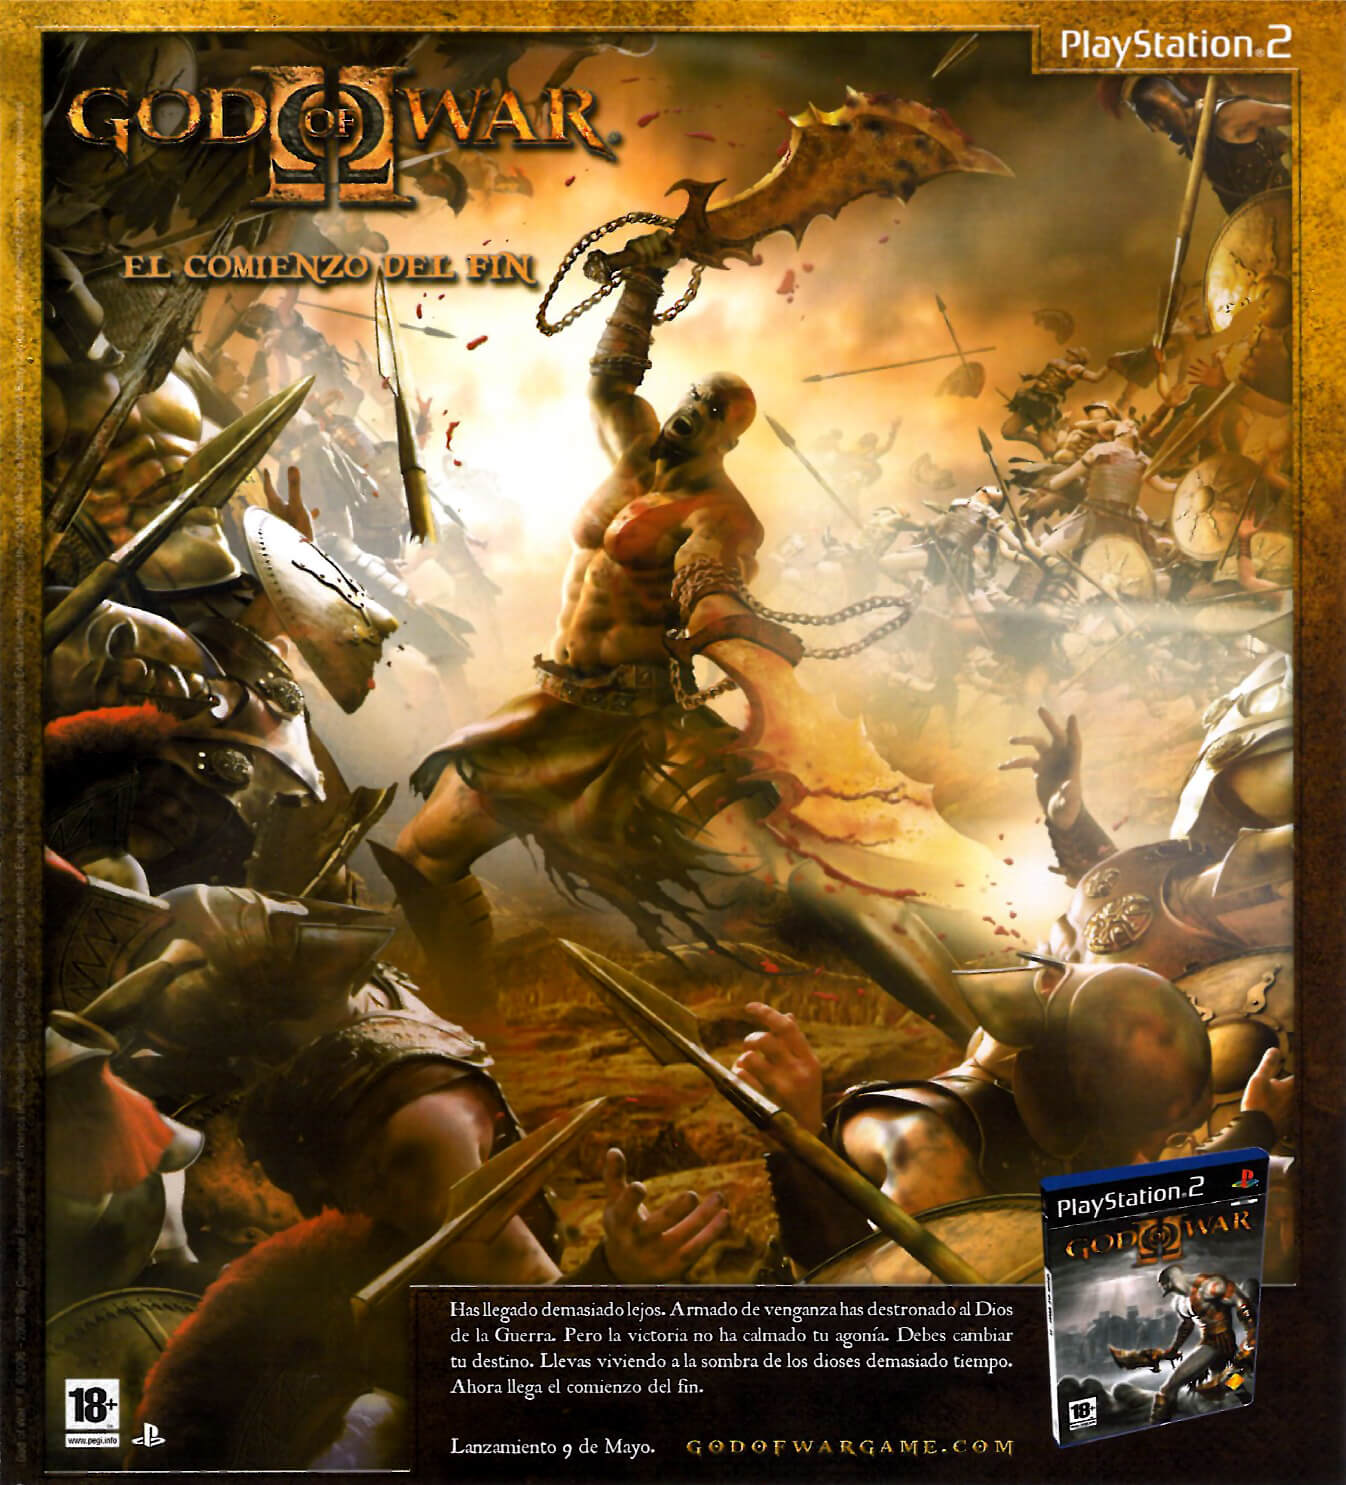 GOD OF WAR 2 - Playstation 2 (PS2) iso download